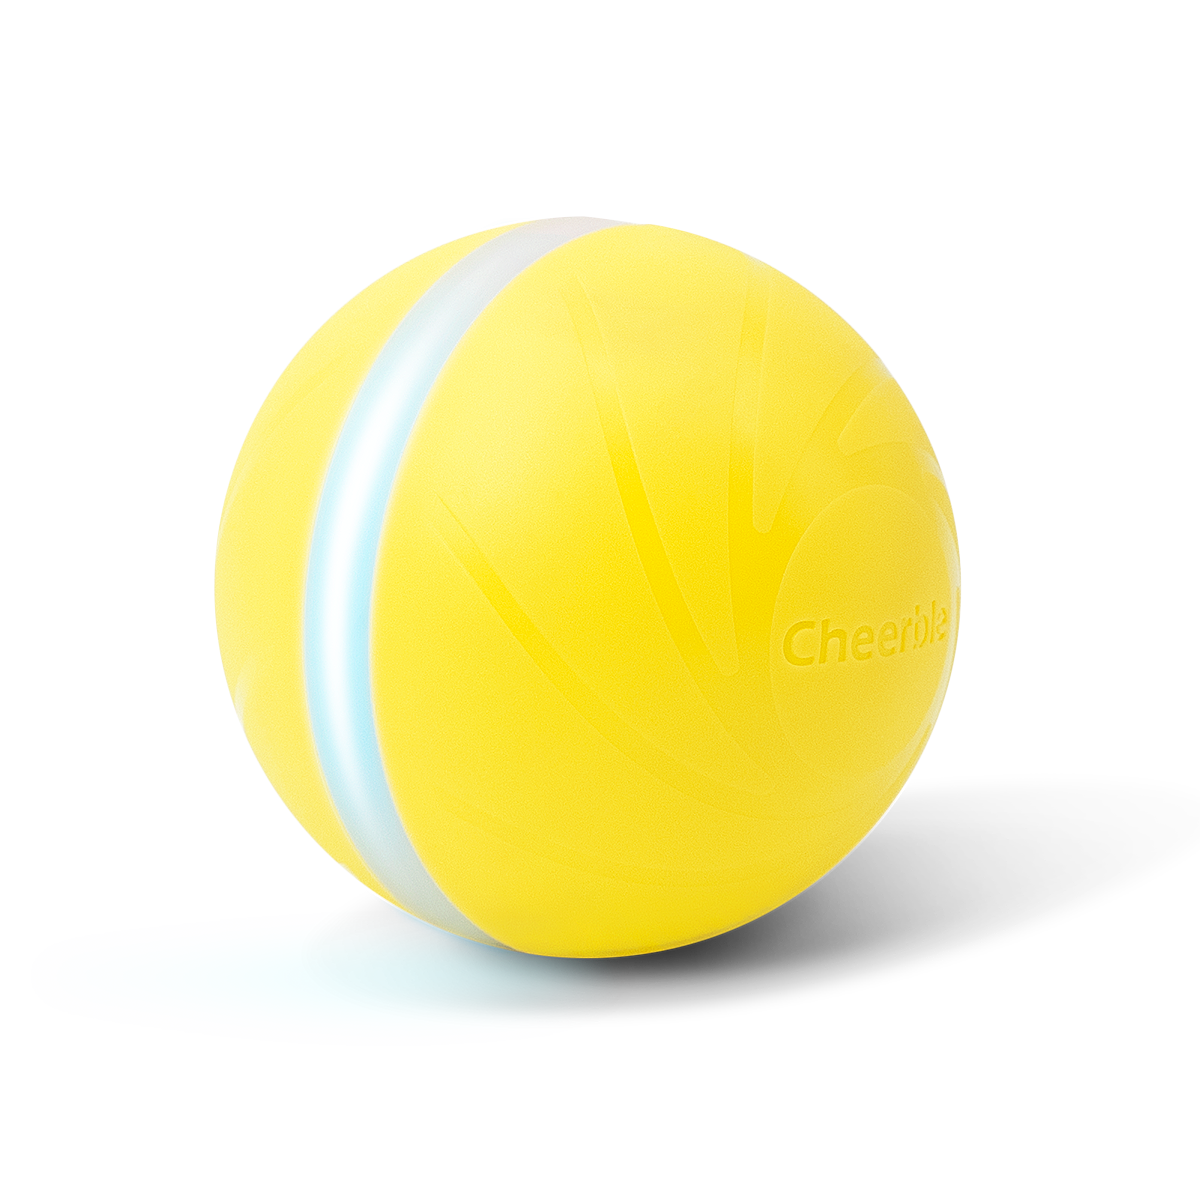 The Yellow Ball